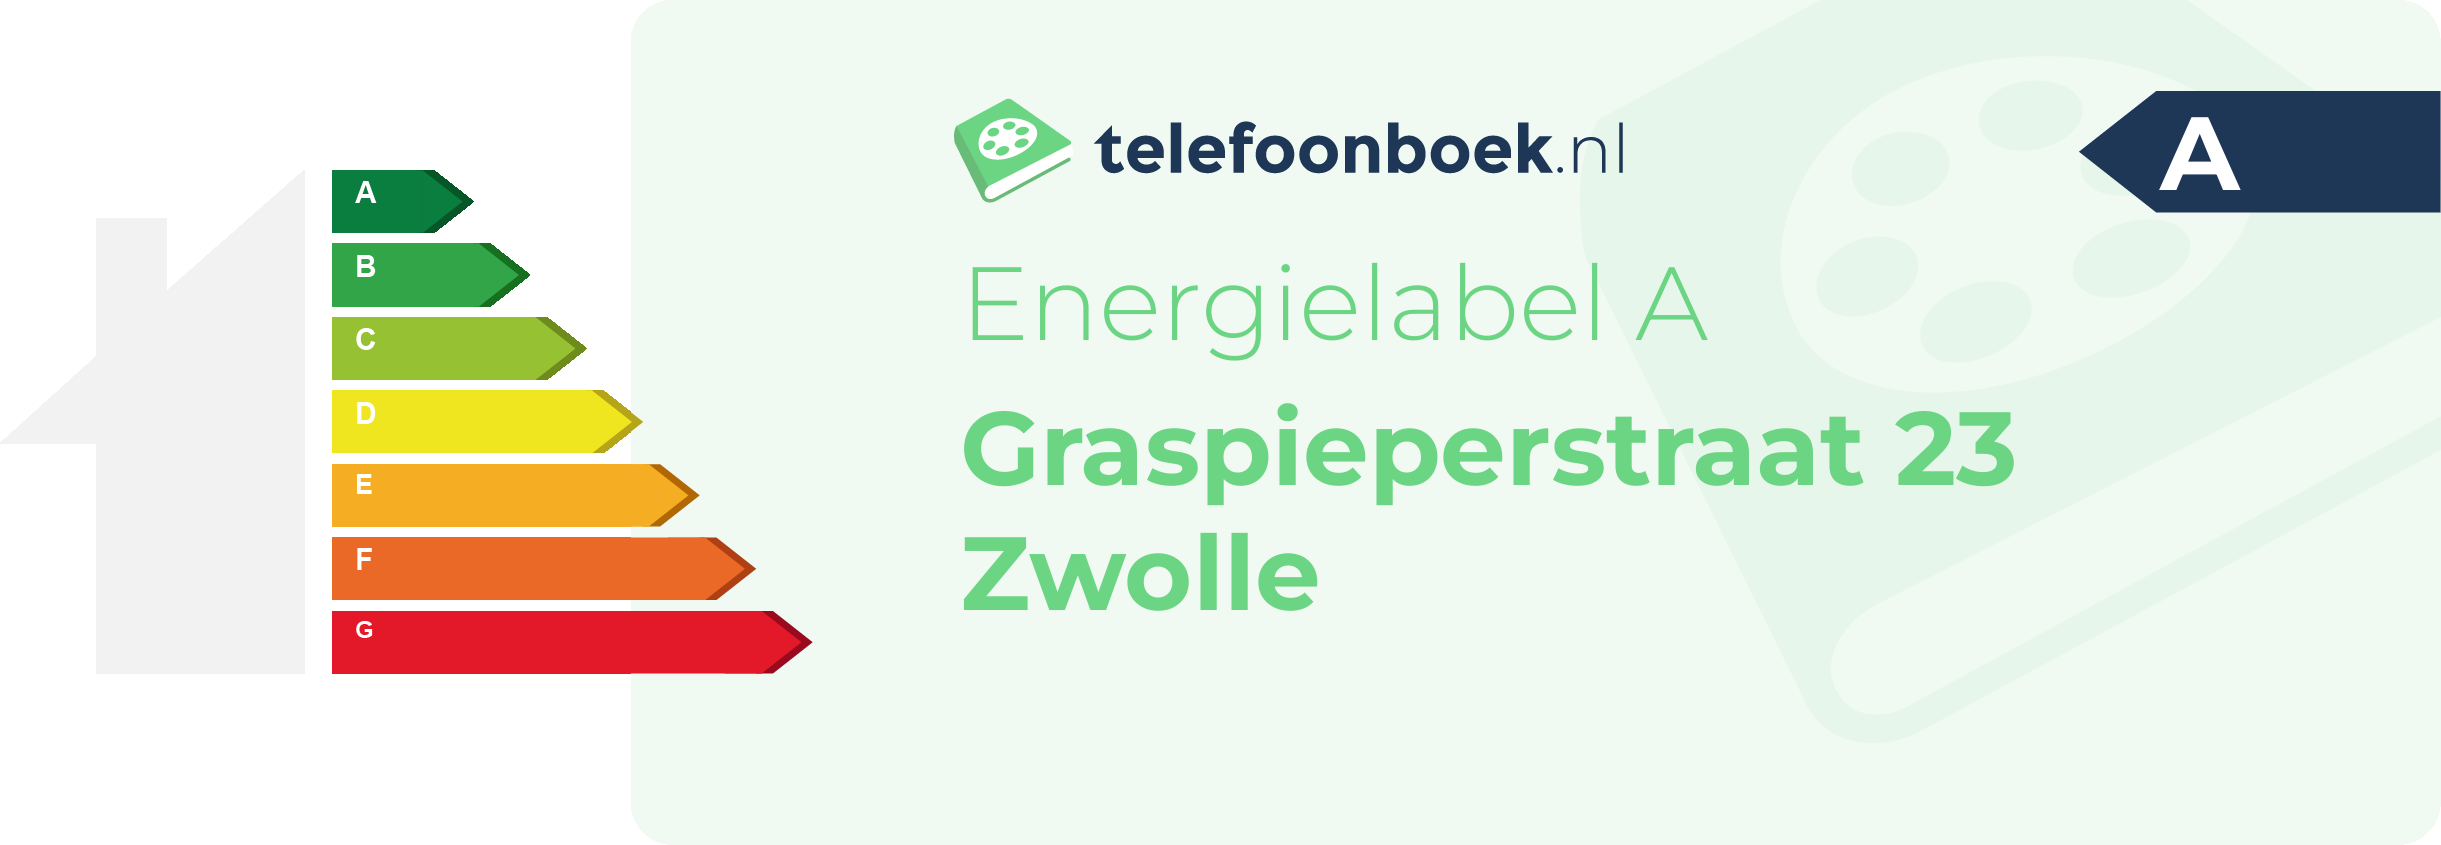 Energielabel Graspieperstraat 23 Zwolle